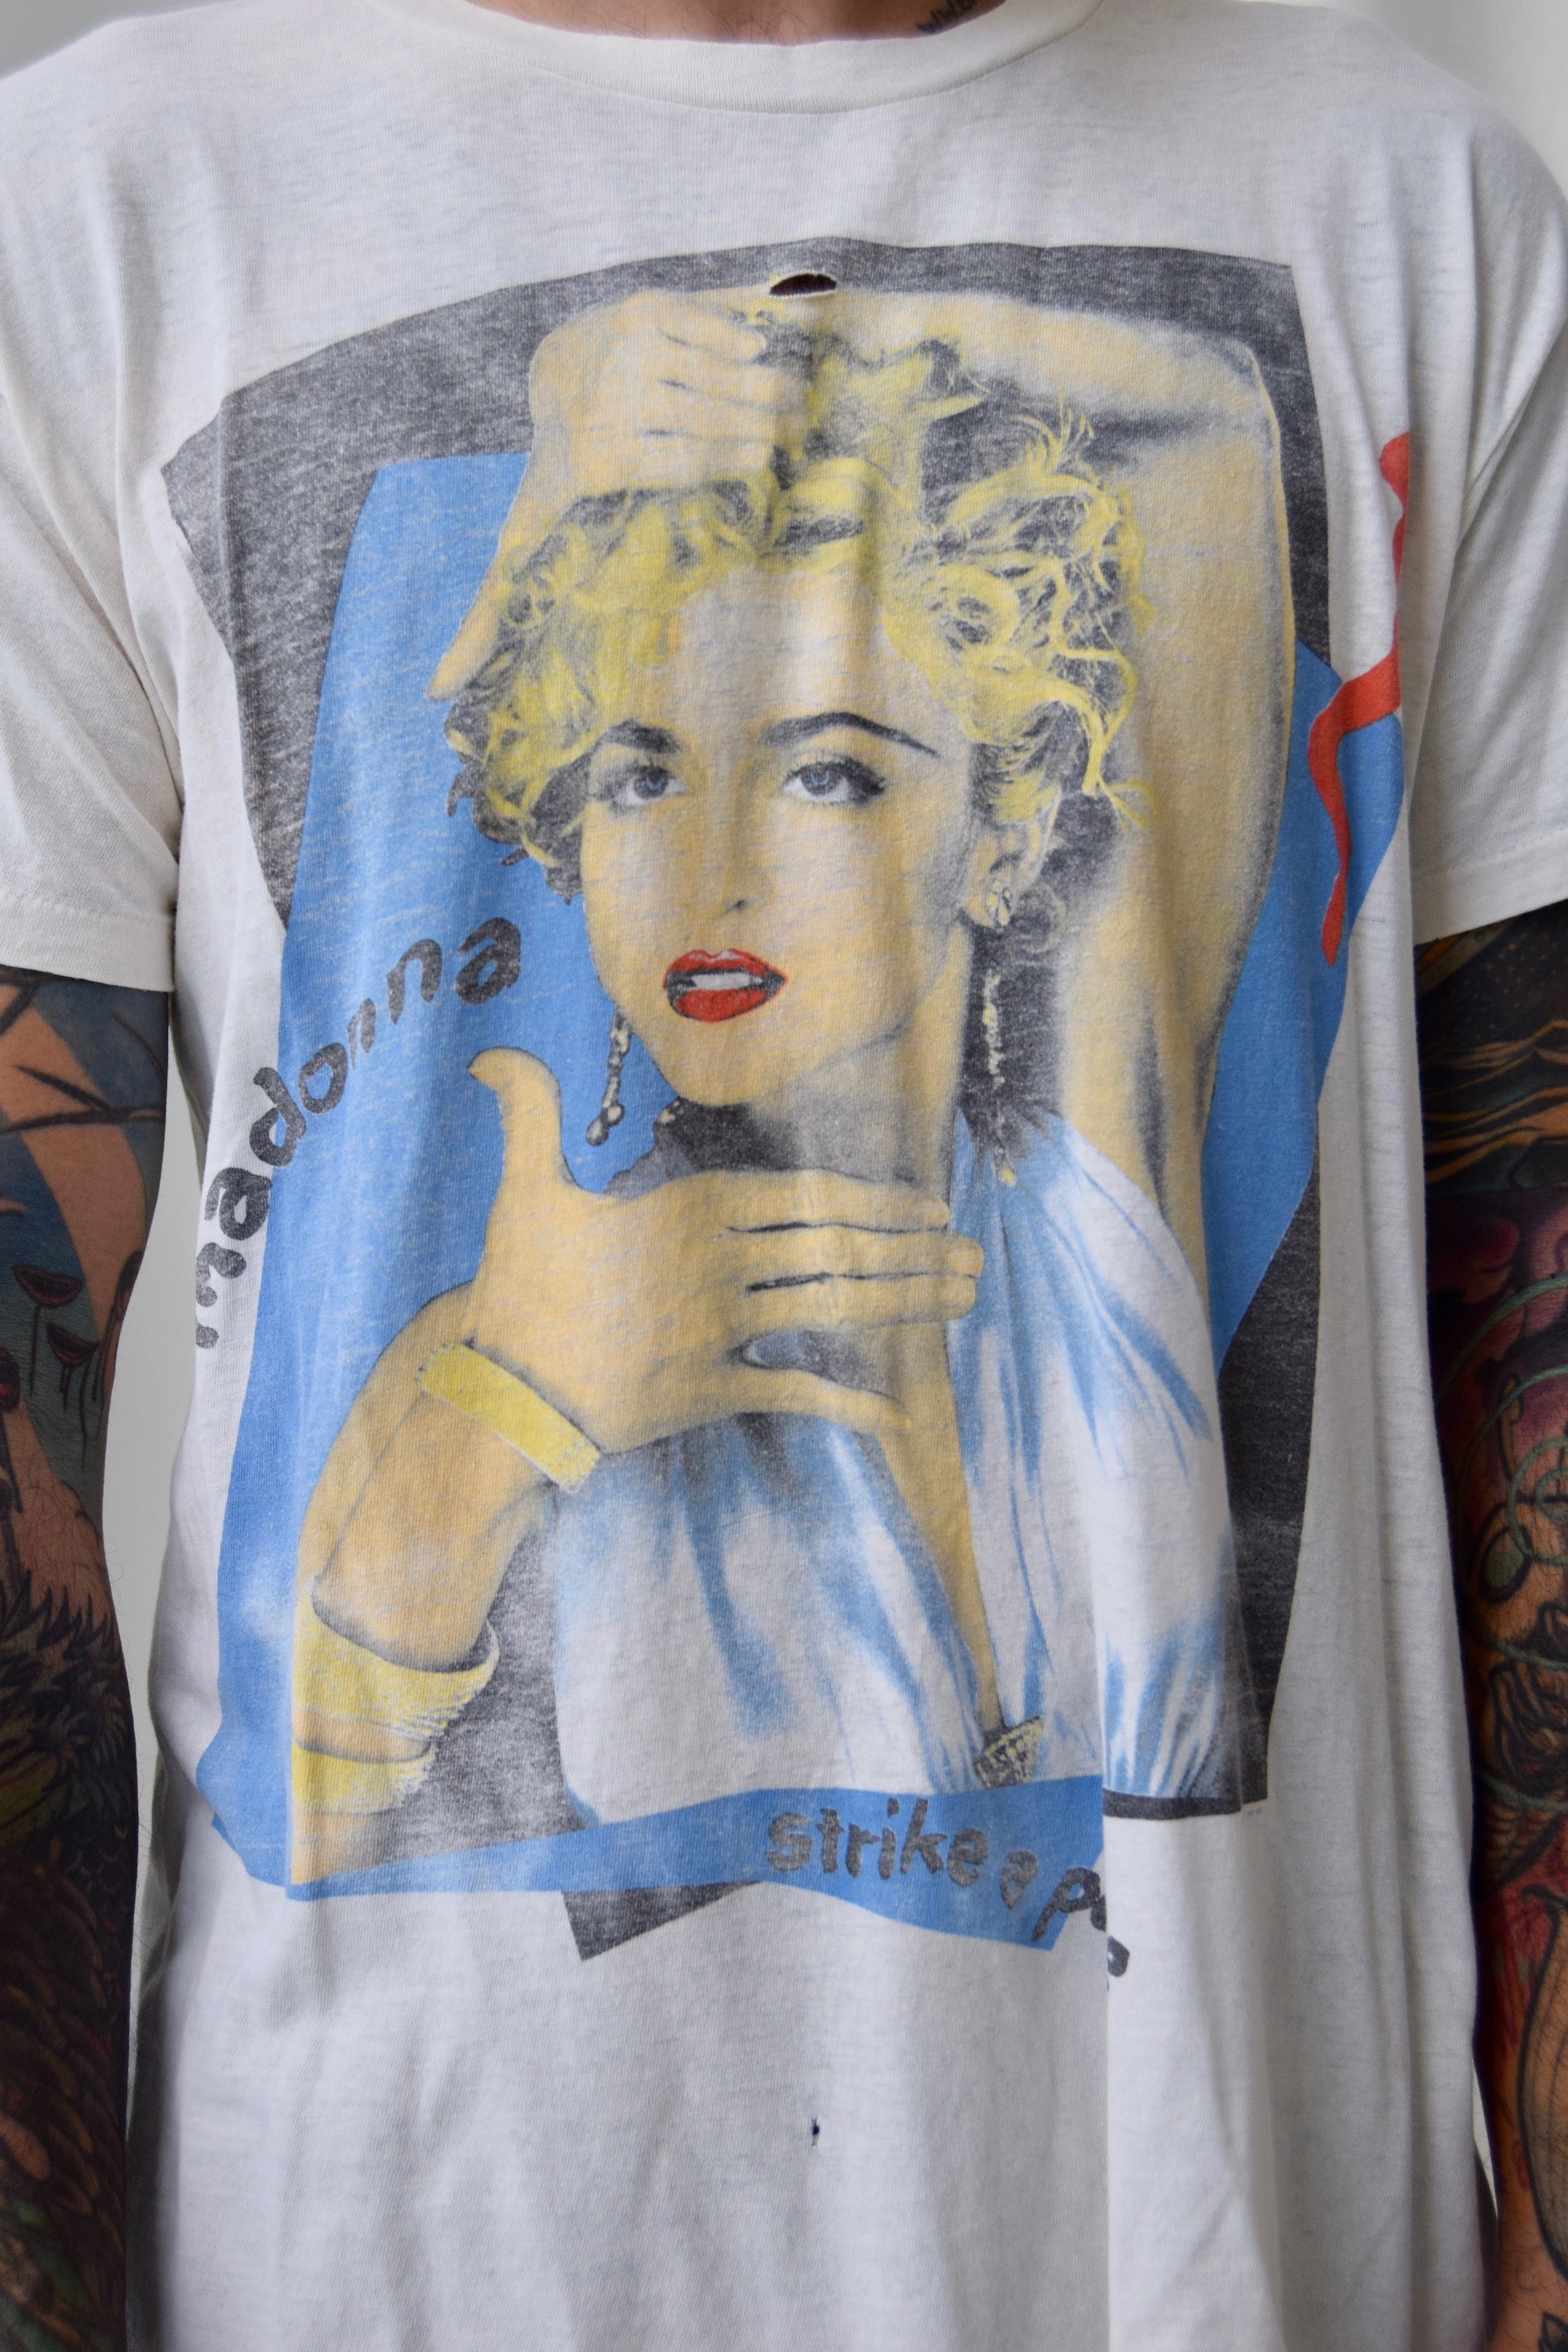 1990 Madonna "Blonde Ambition" World Tour T-Shirt